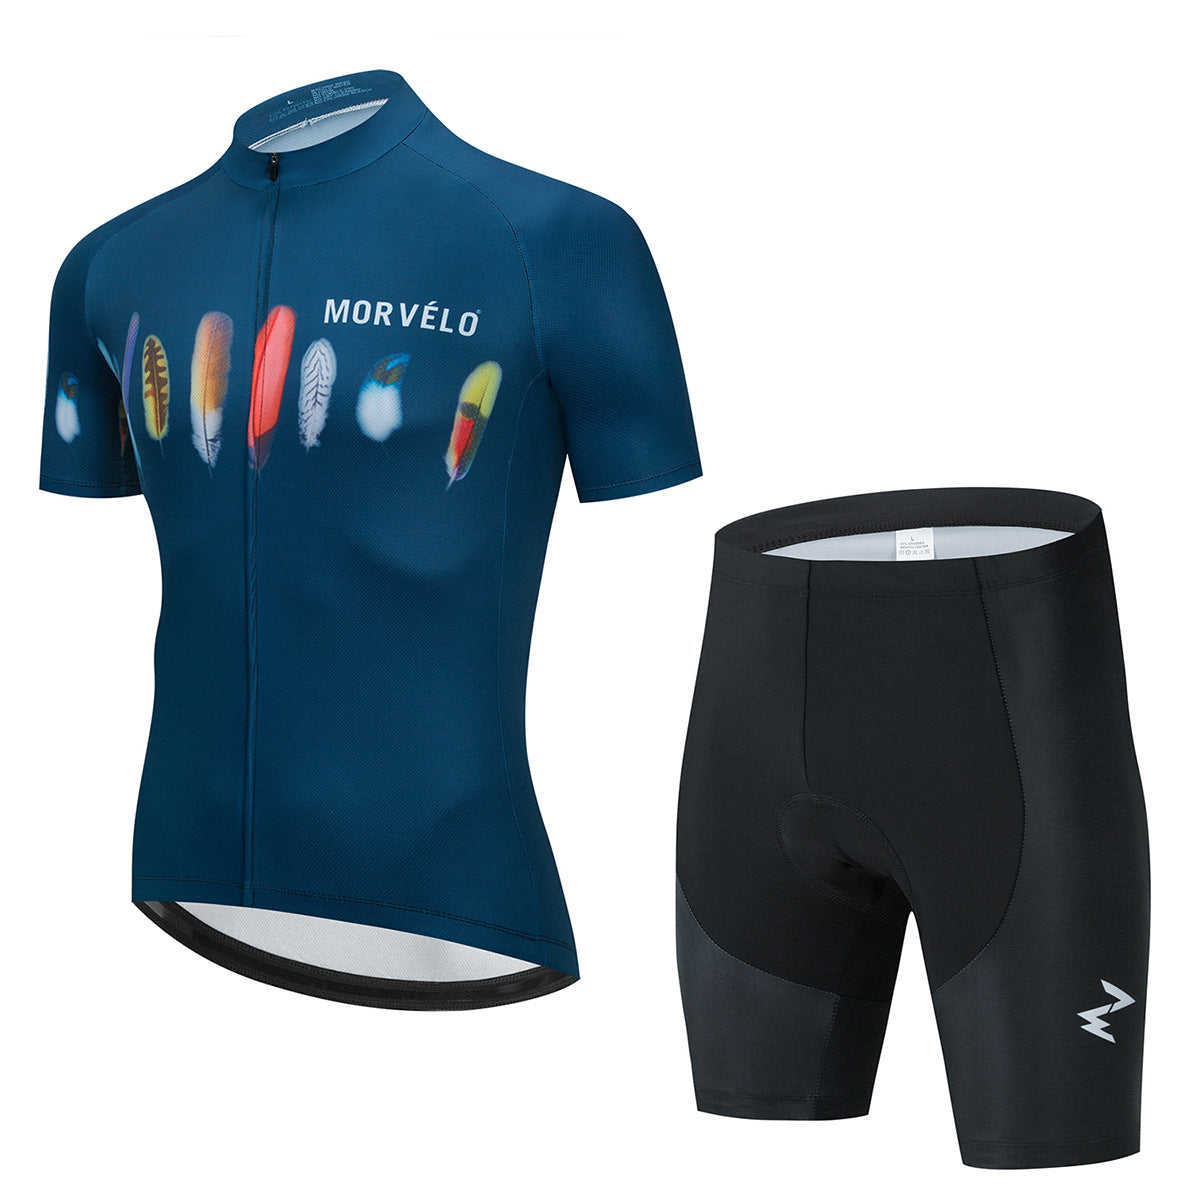 Cycling sports kit